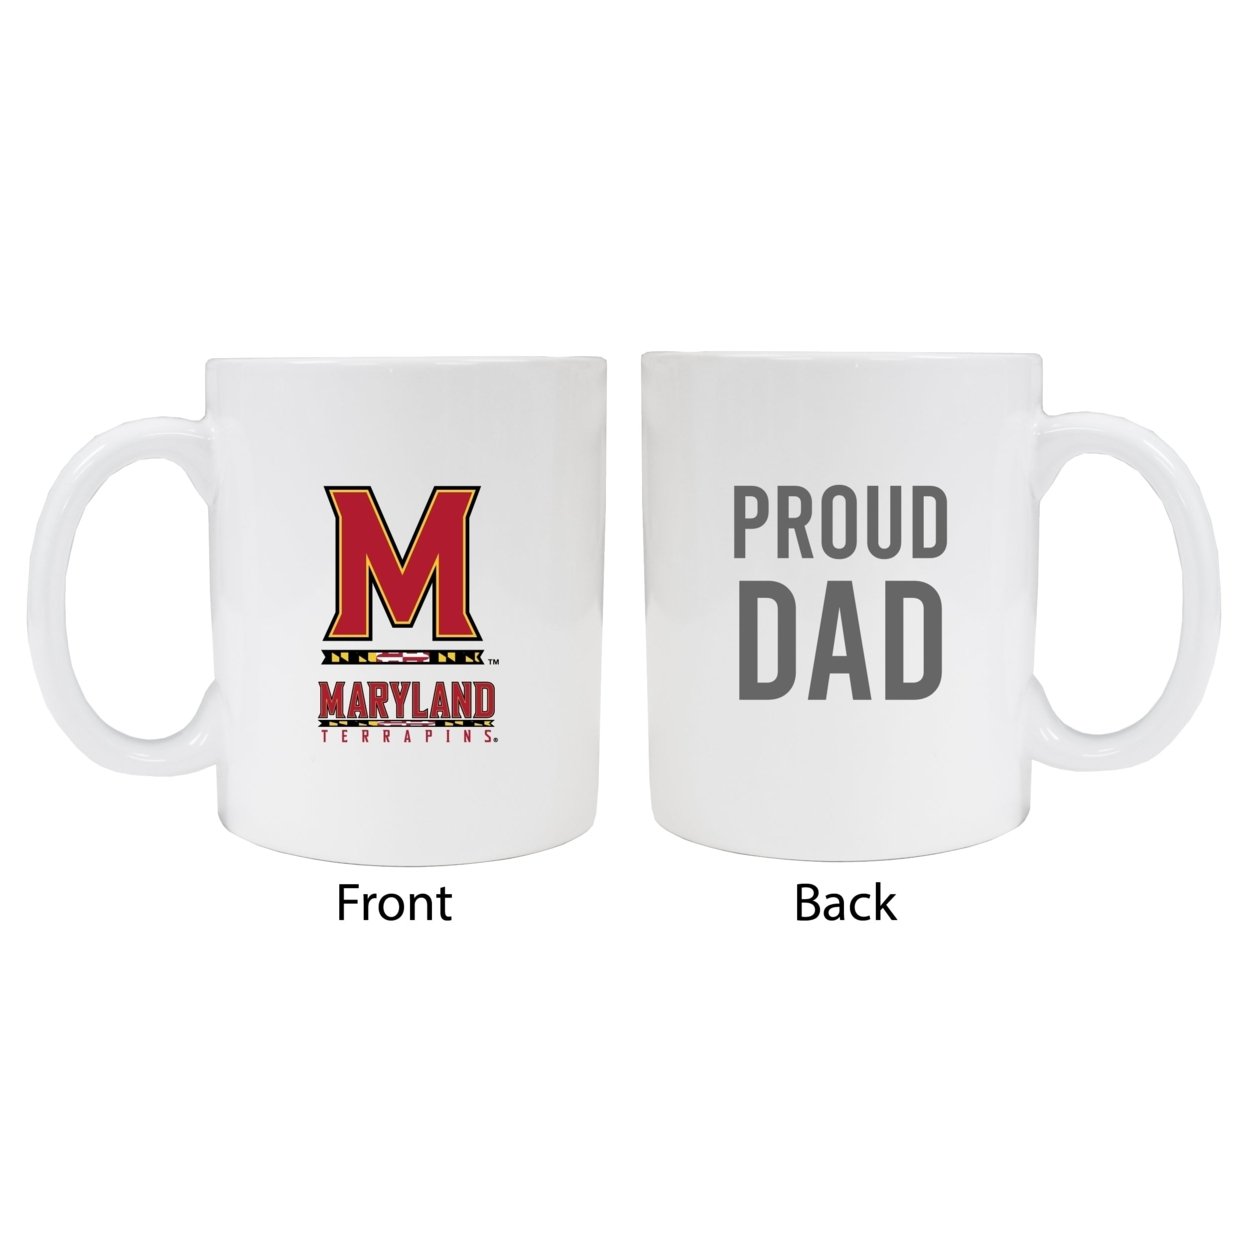 Maryland Terrapins Proud Dad Ceramic Coffee Mug - White